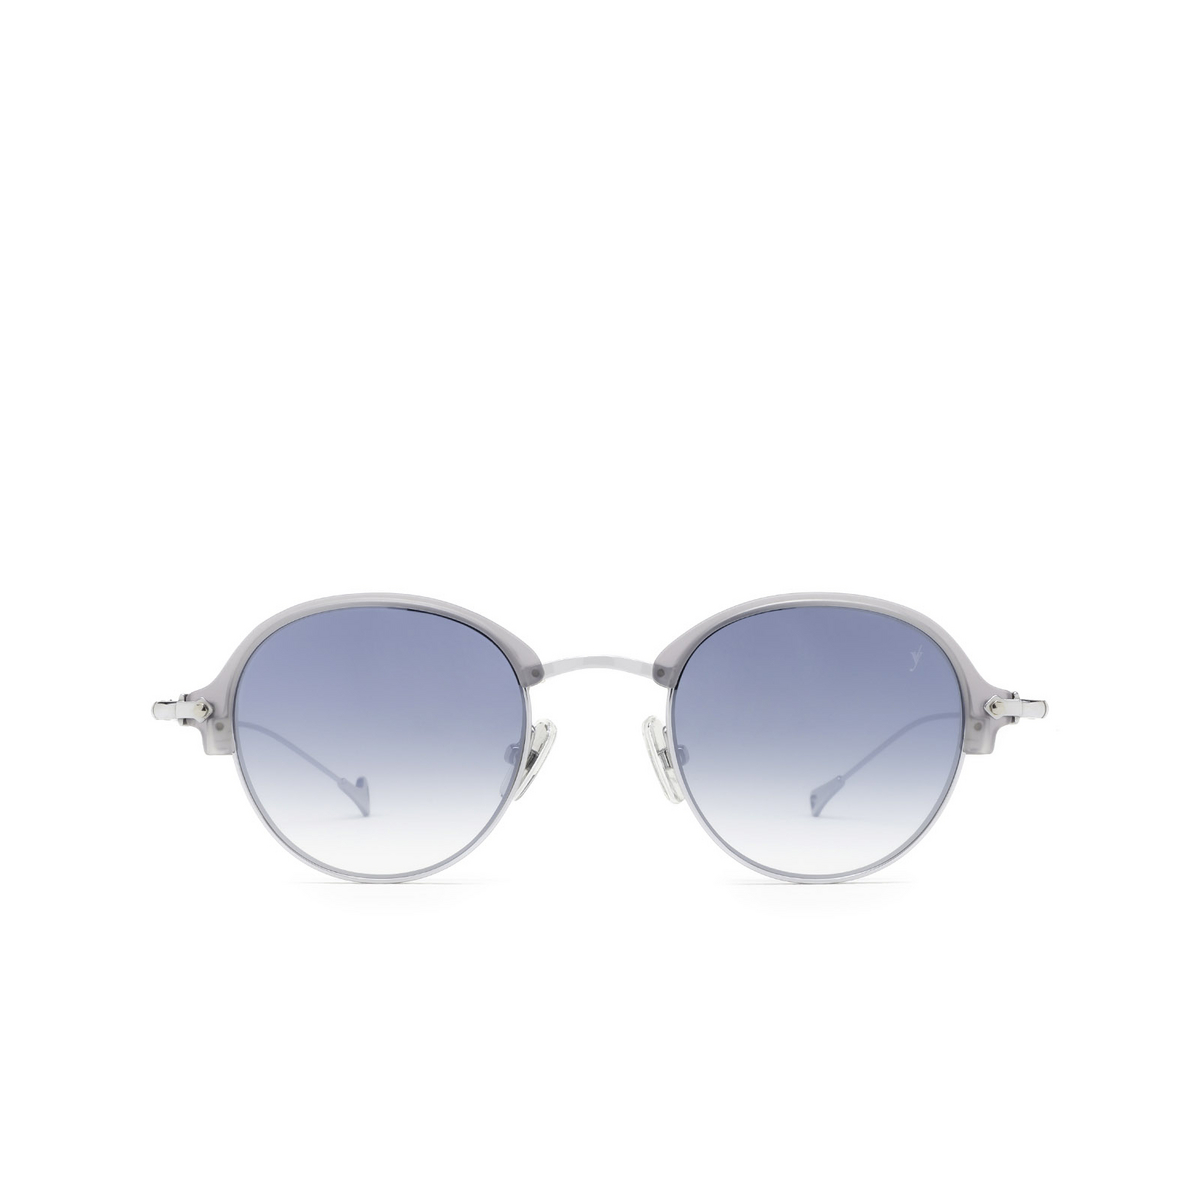 Eyepetizer® Round Sunglasses: Robert color Ice Grey Matt C.R-1-26F - front view.